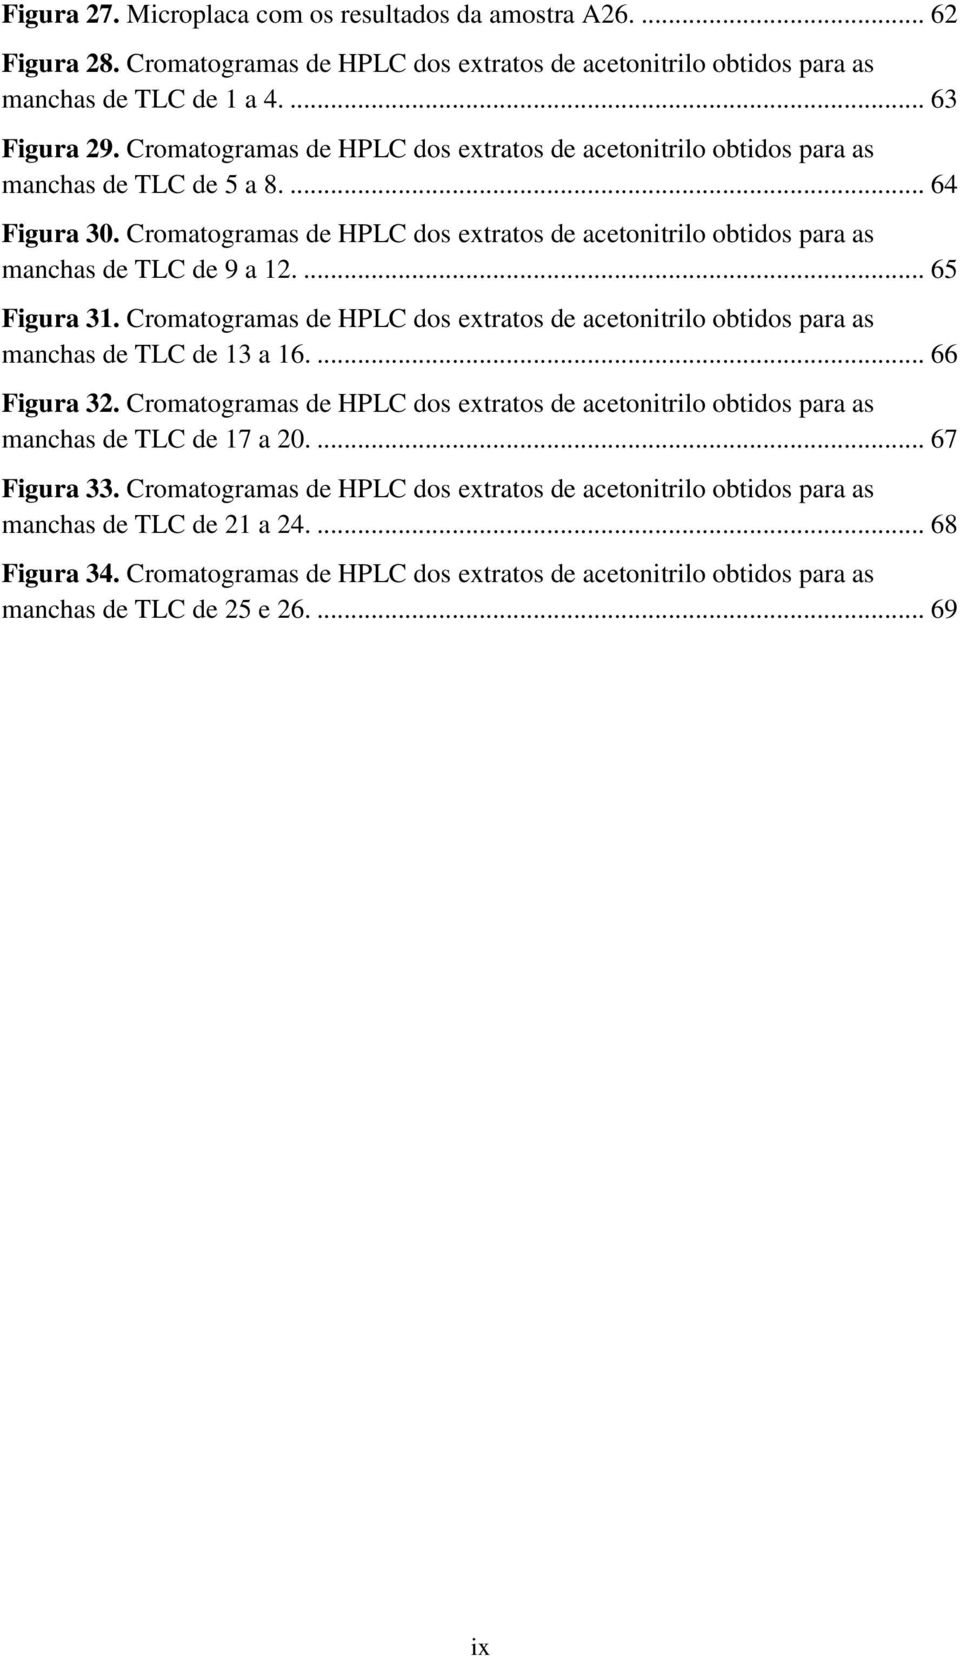 Cromatogramas de HPLC dos extratos de acetonitrilo obtidos para as manchas de TLC de 9 a 12.... 65 Figura 31.